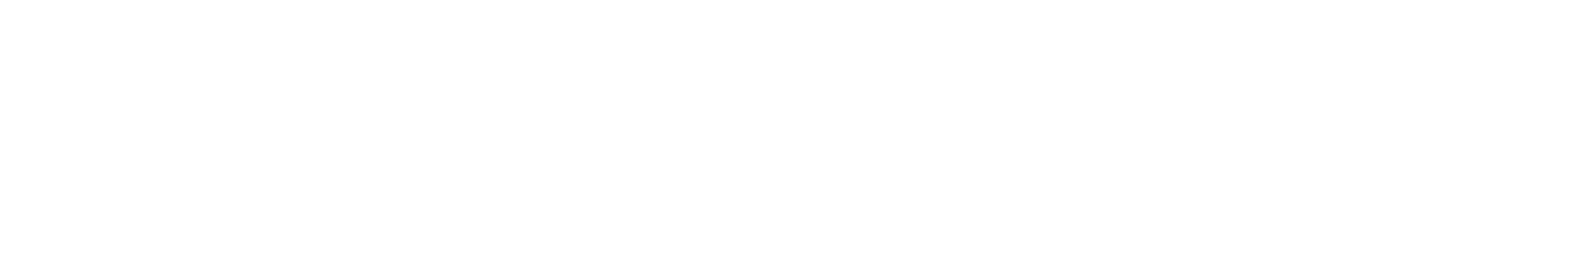 W. P. Carey logo large for dark backgrounds (transparent PNG)